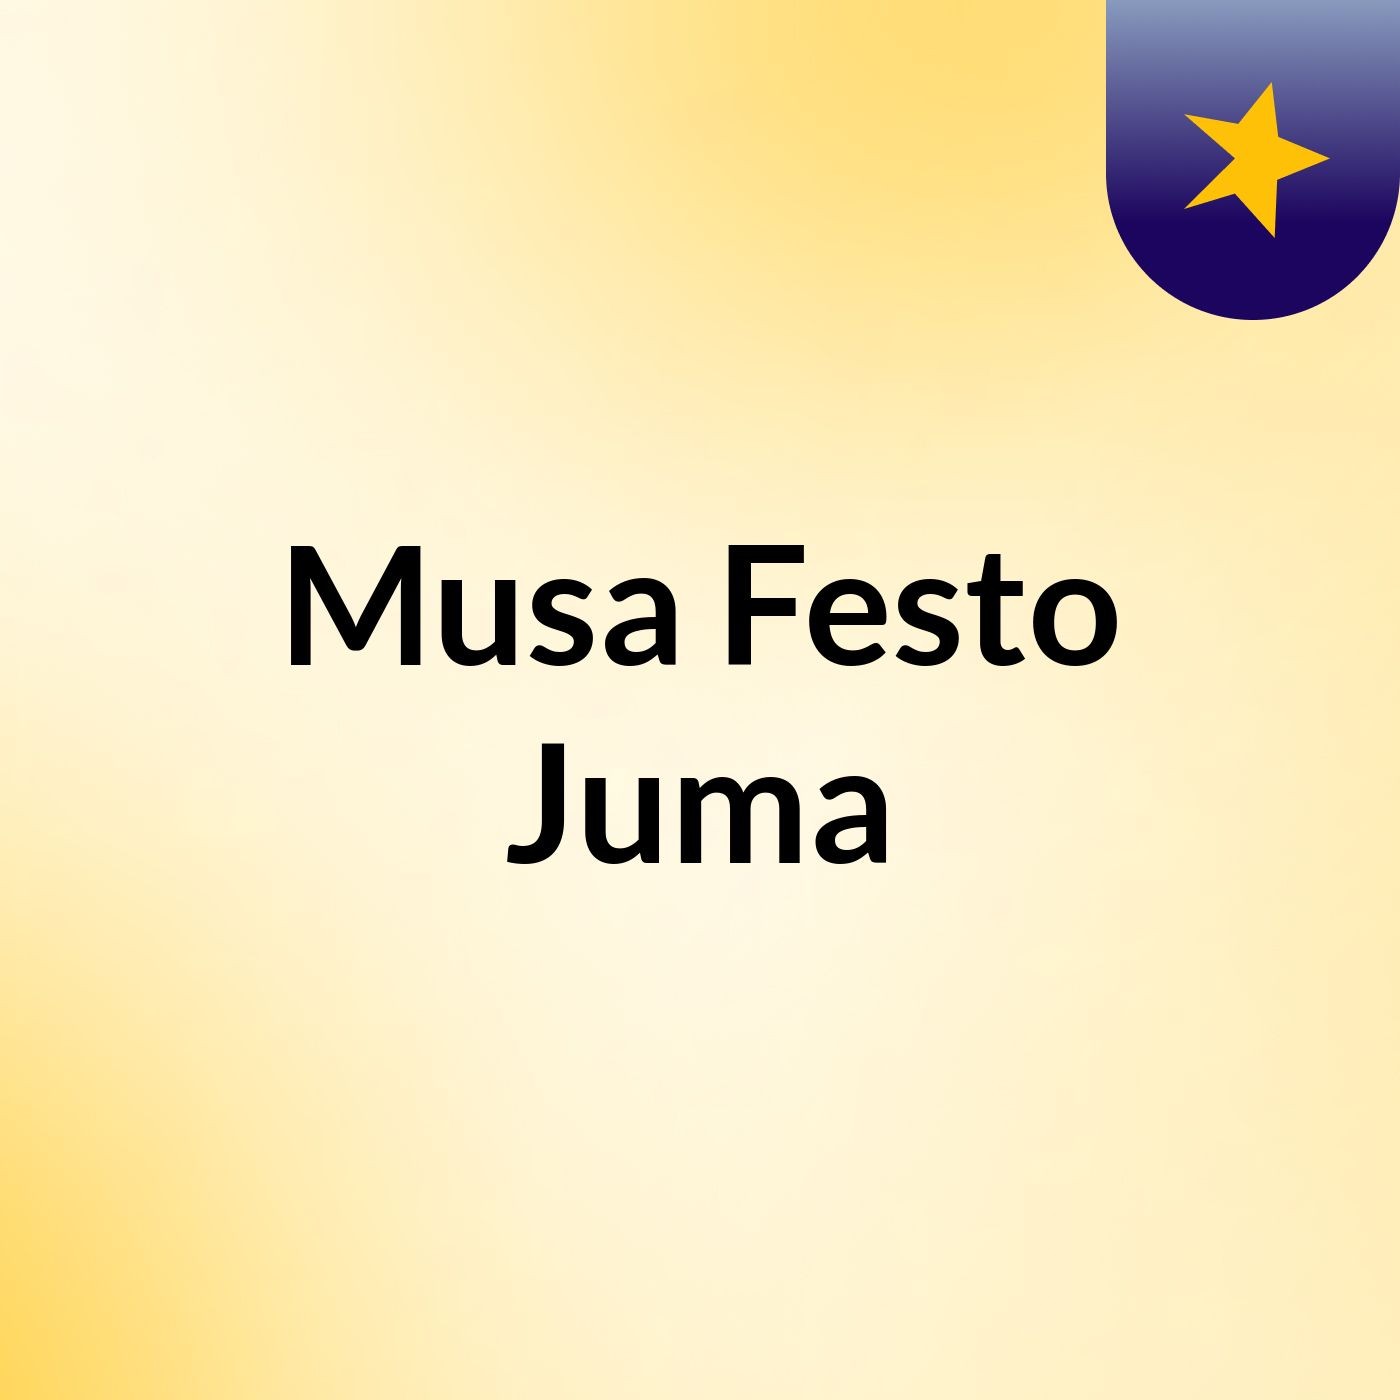 Musa Festo Juma